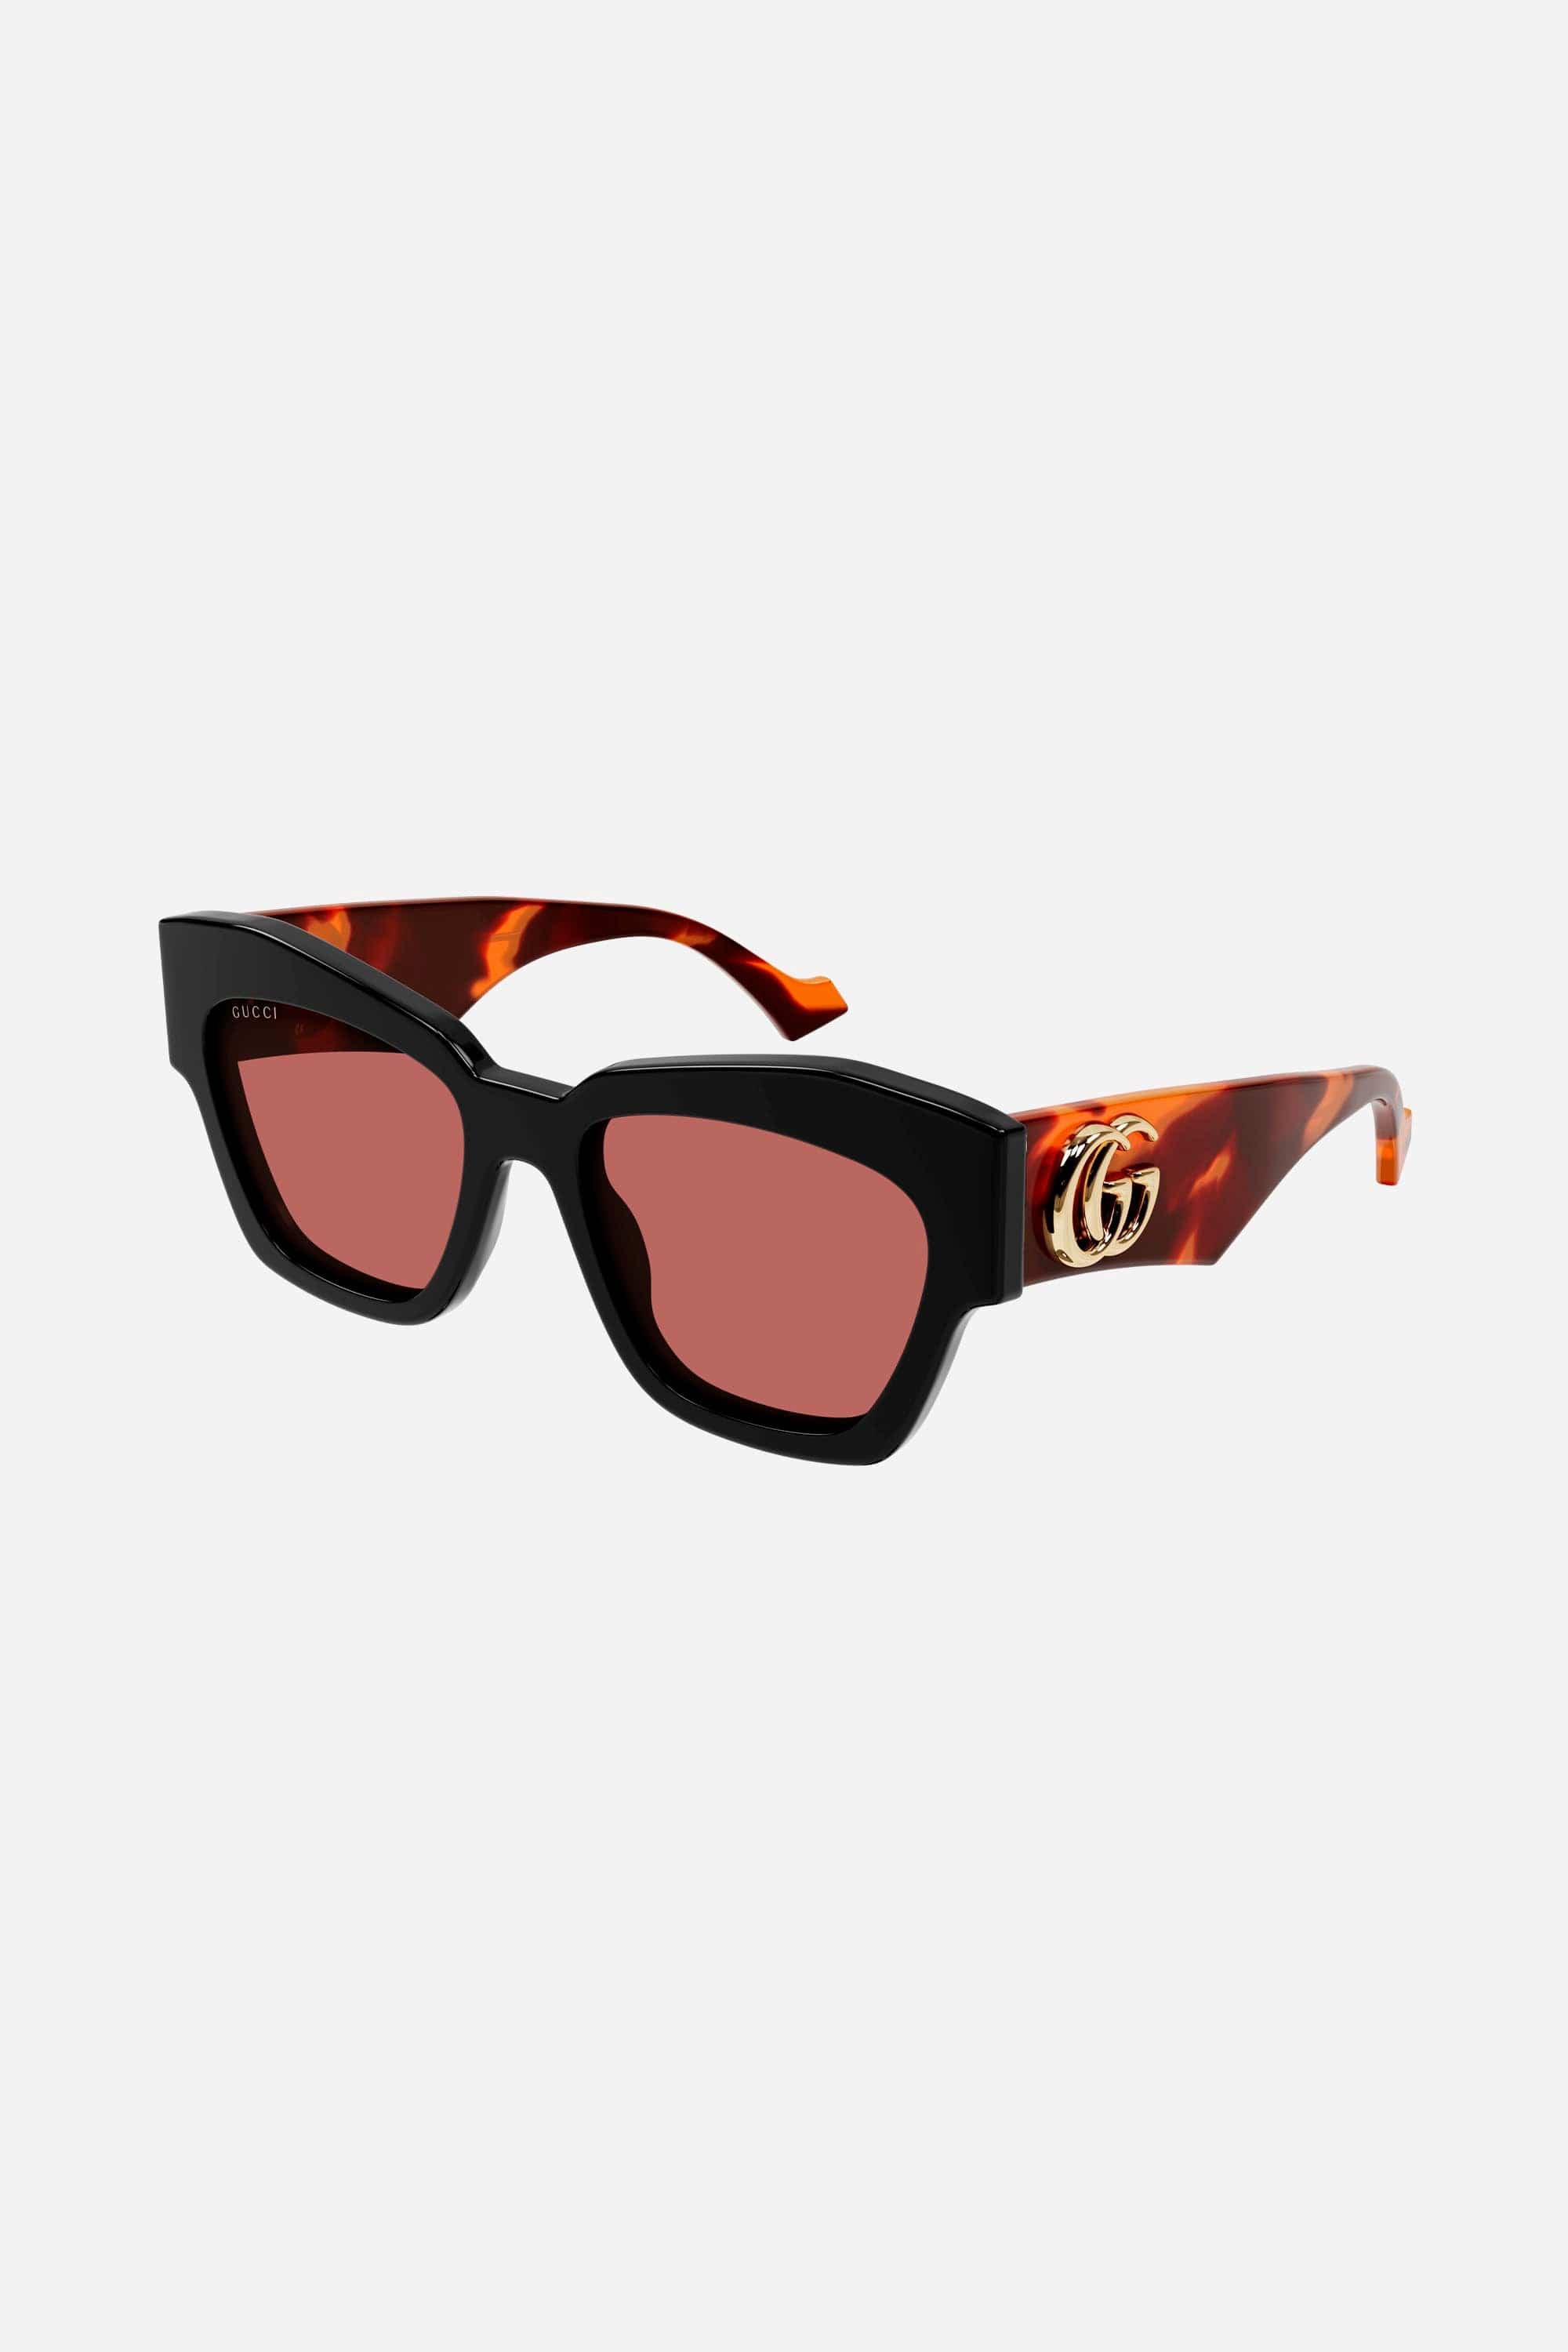 Gucci brown and pink chuncky cat eye sunglasses - Eyewear Club